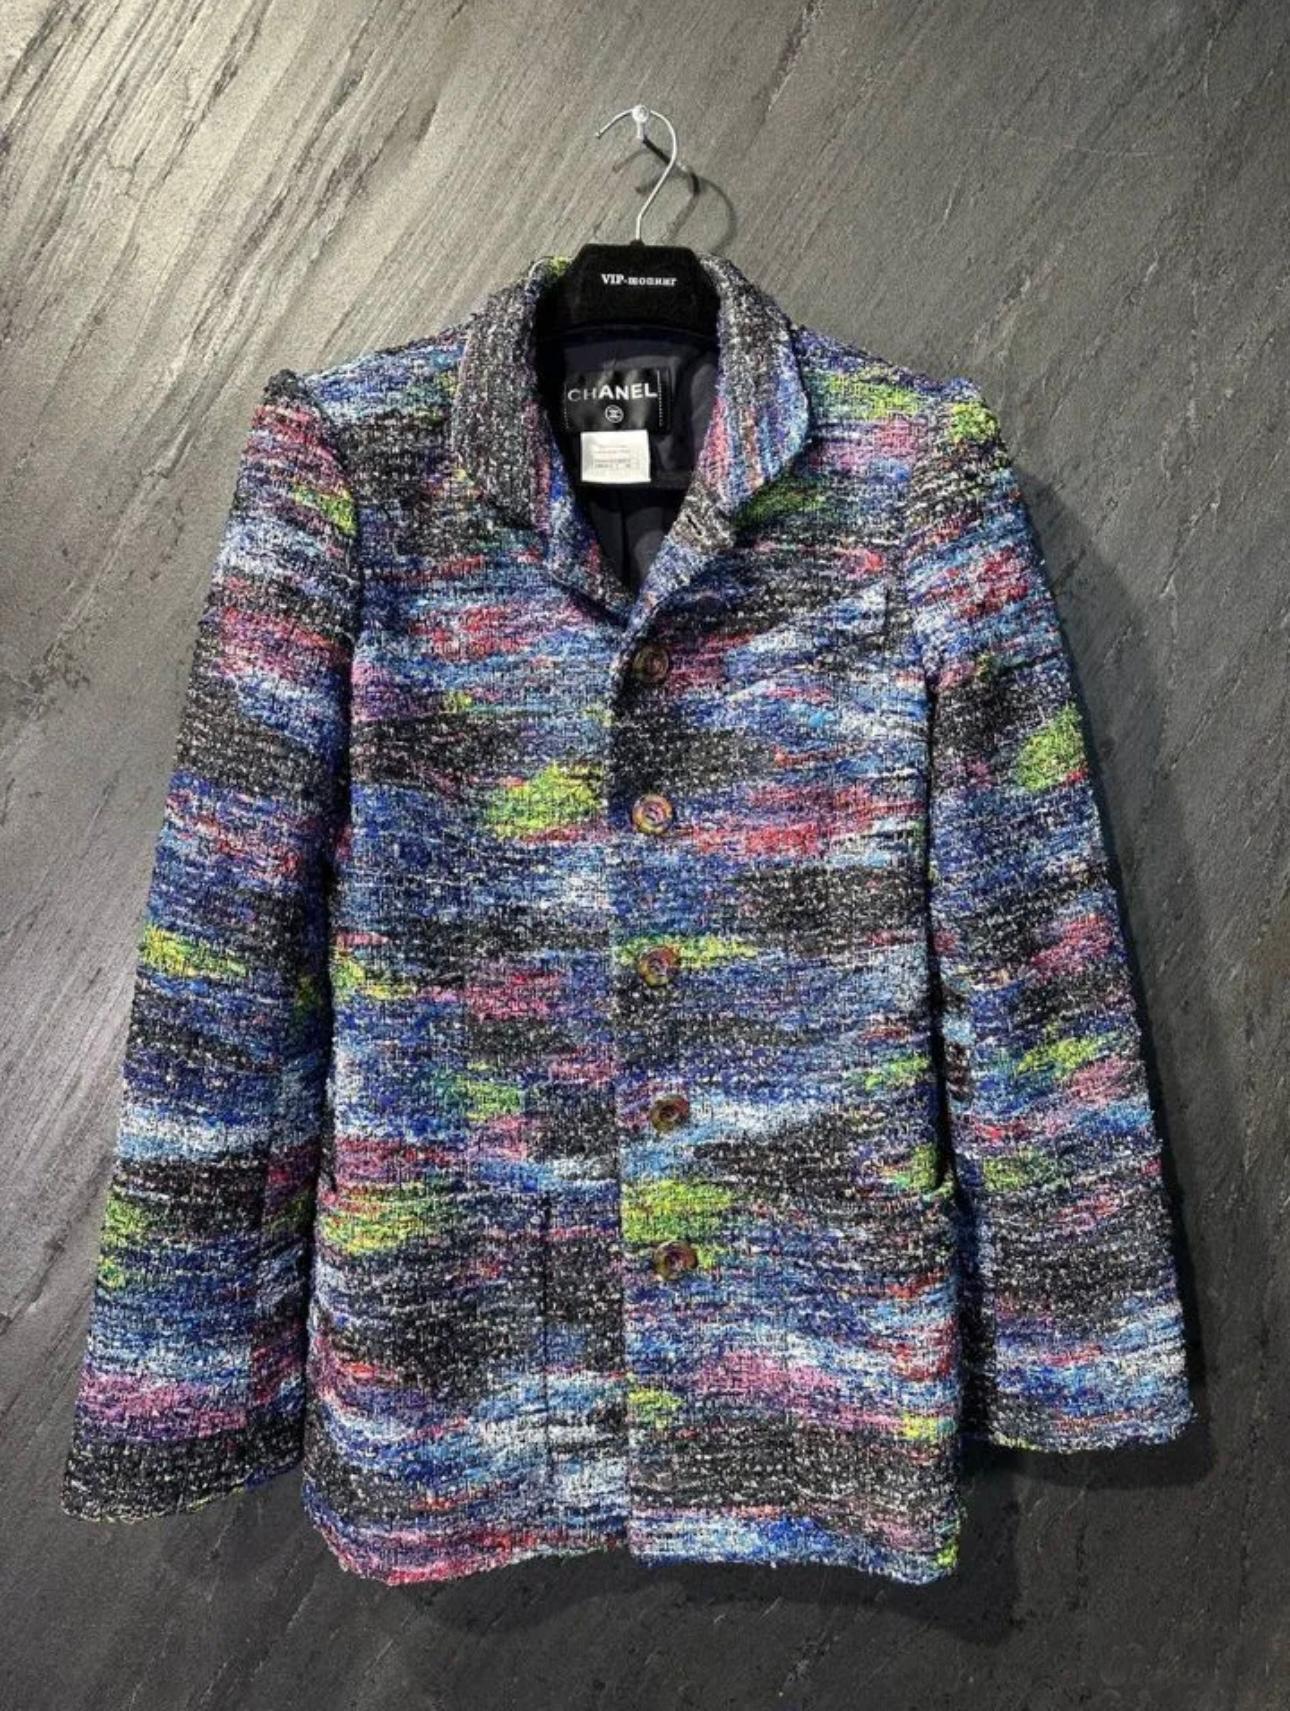 Chanel Supermodel Nata Vodianova Style Tweed Jacket 3